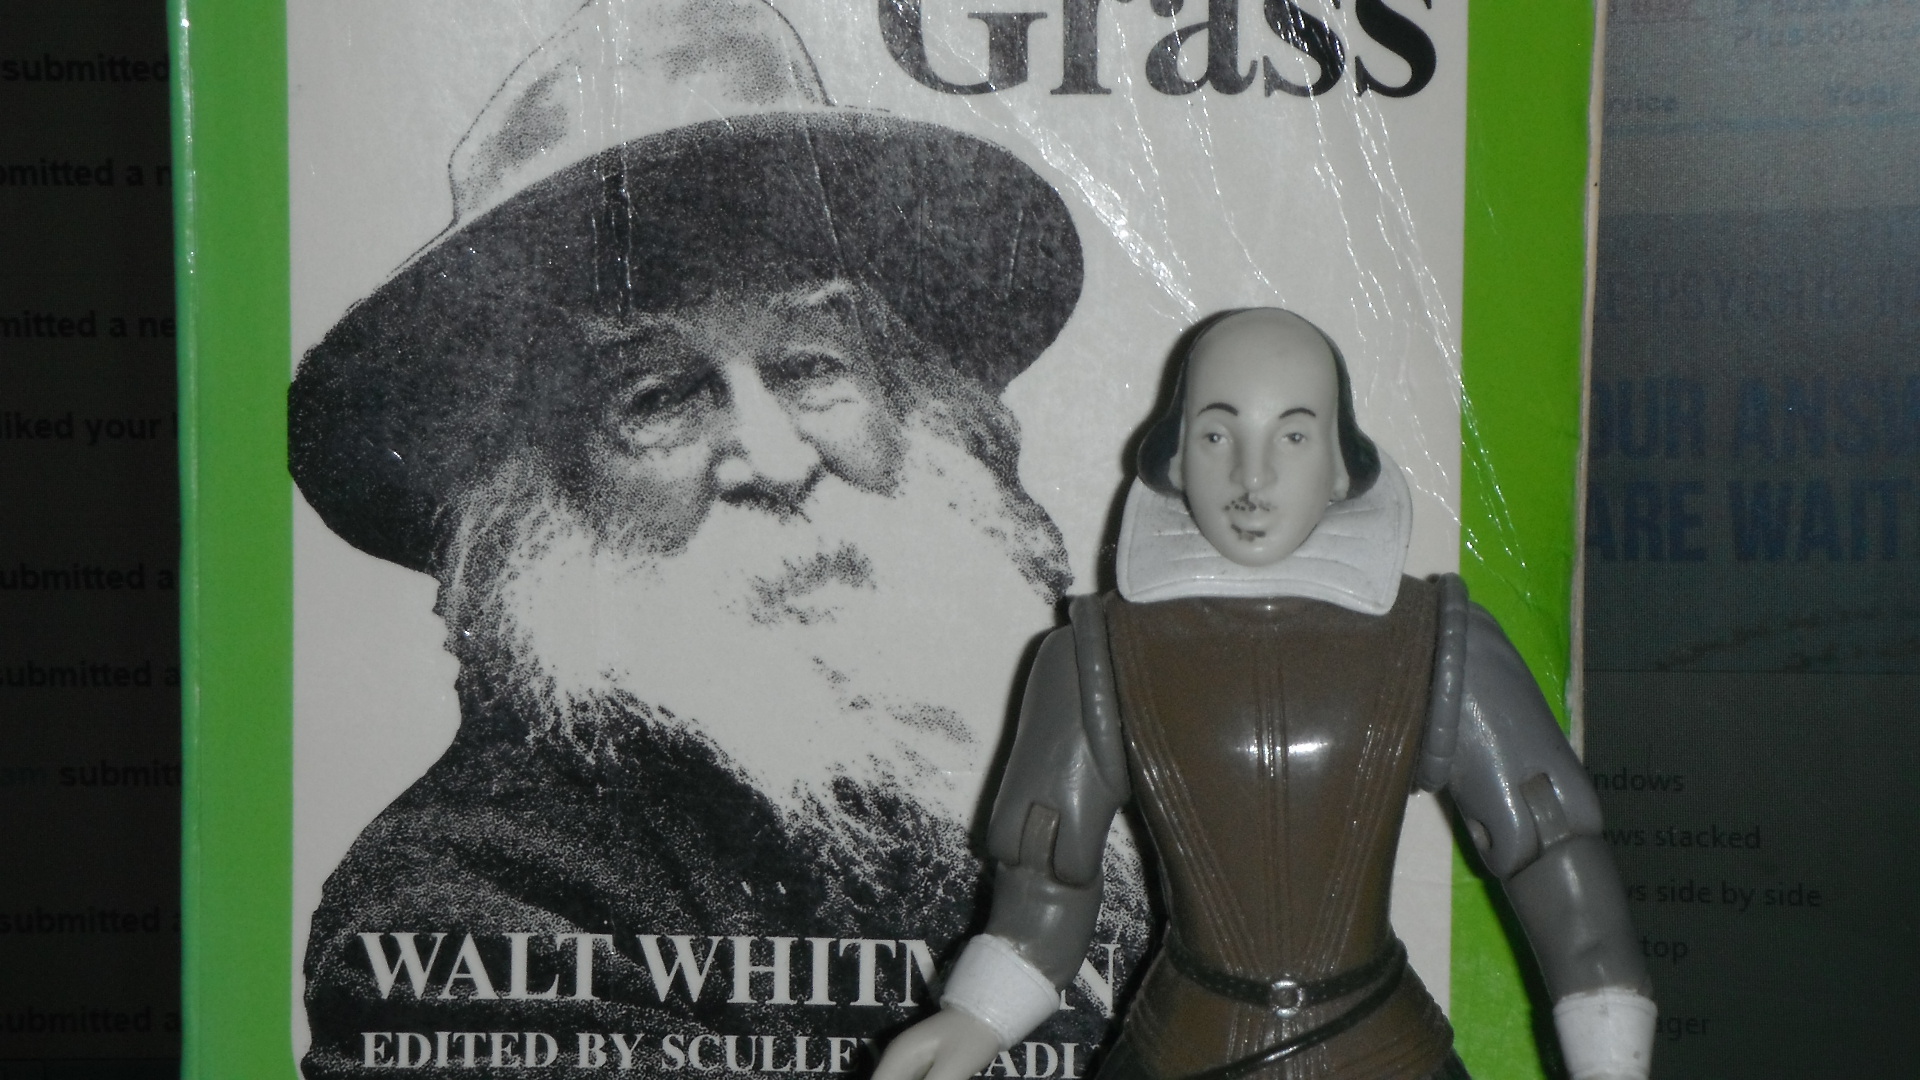 Photo taken by me – Shakespeare and Walt Whitman